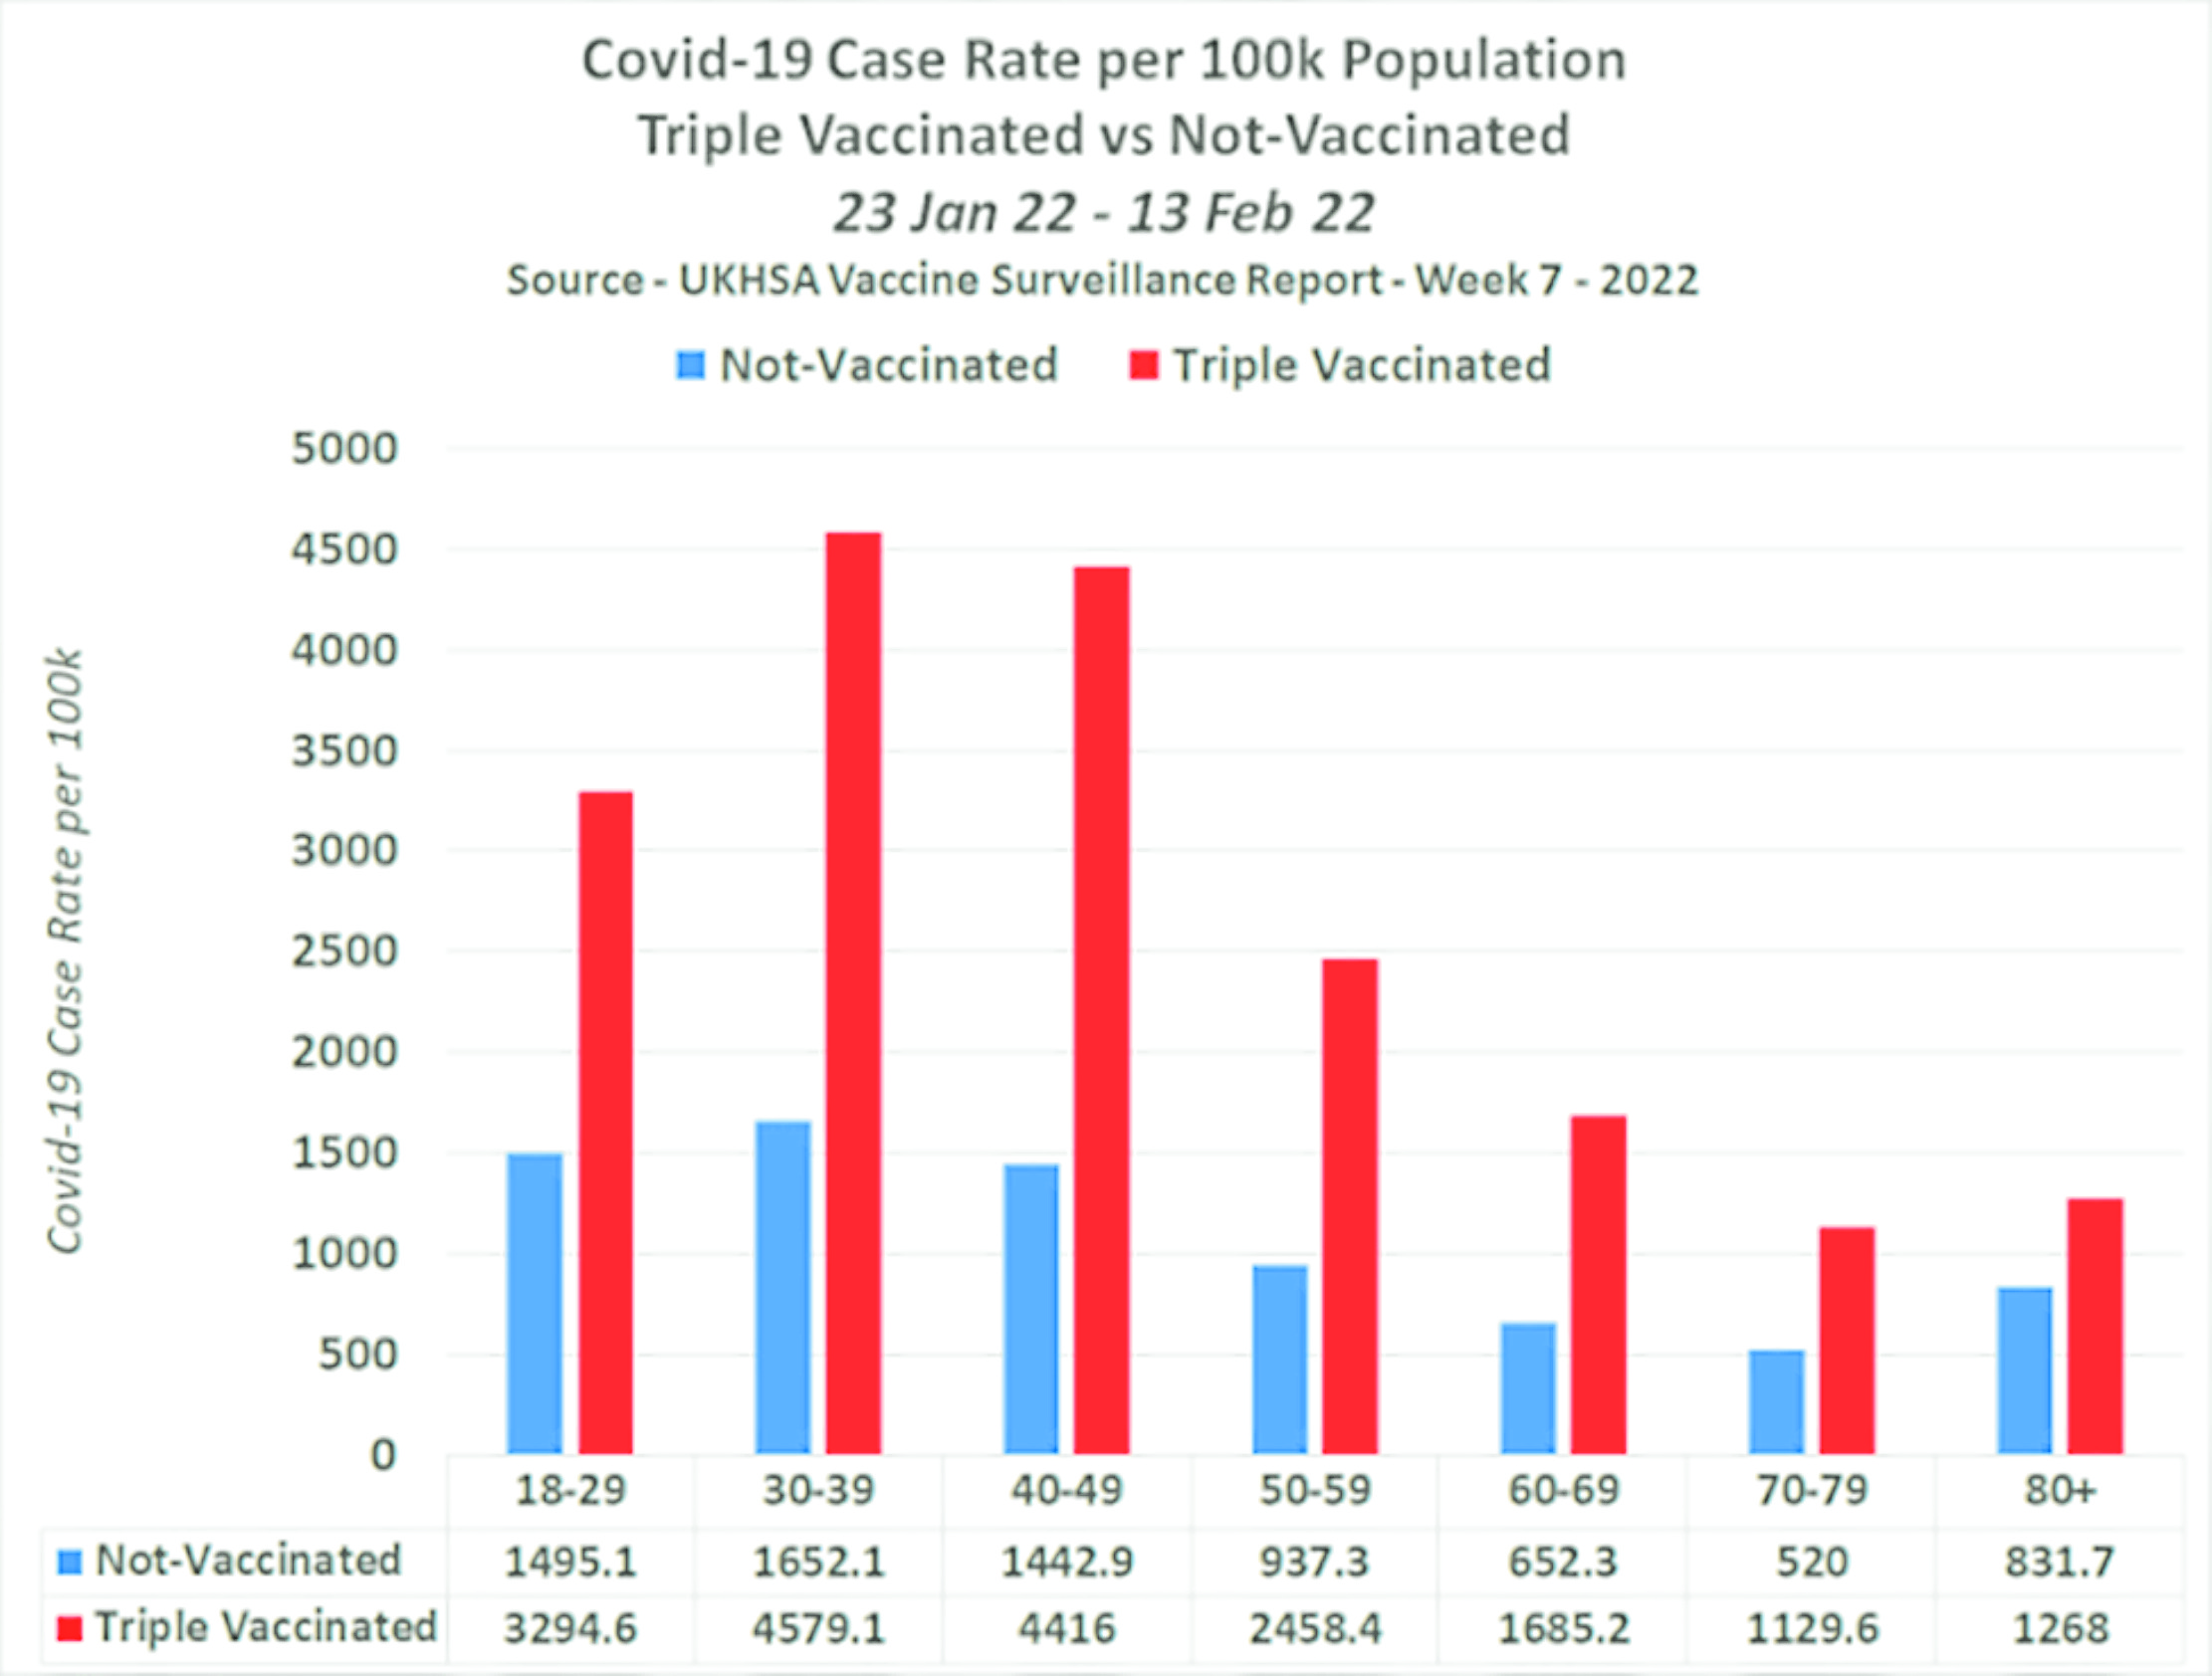 COVID-19 case rate per 100k population